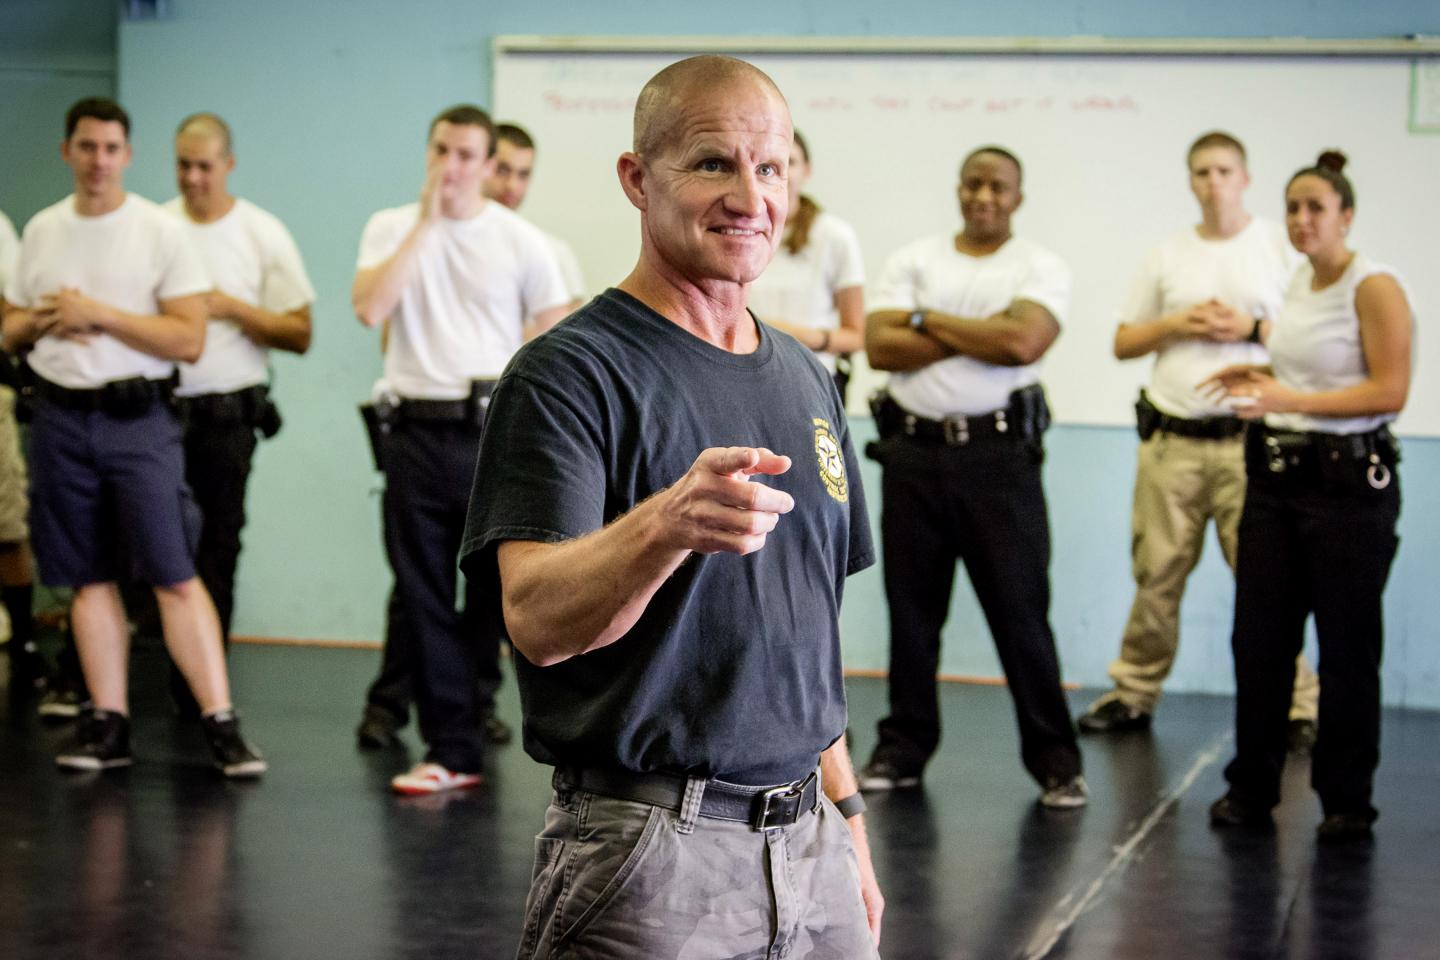 Police Training Institute Director Michael Schlosser